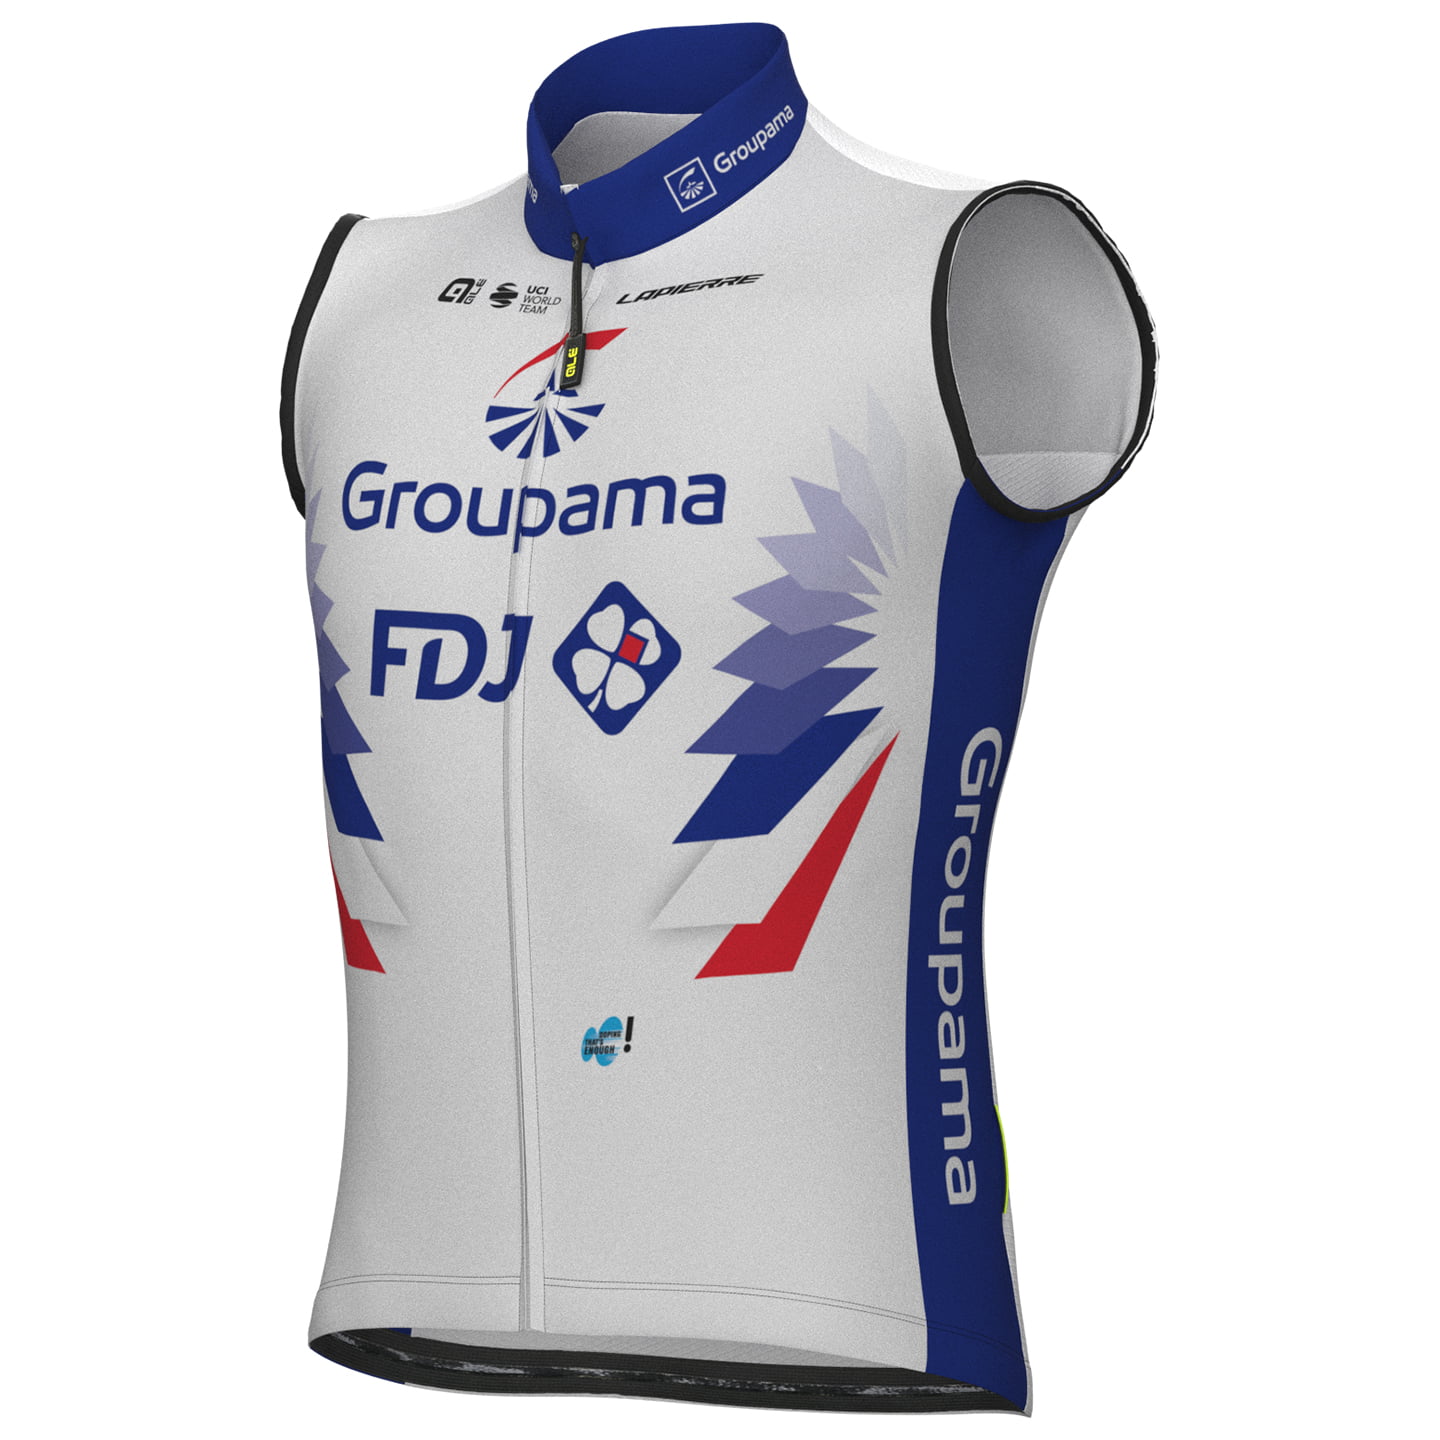 GROUPAMA - FDJ 2022 Wind Vest, for men, size L, Cycling vest, Cycle gear